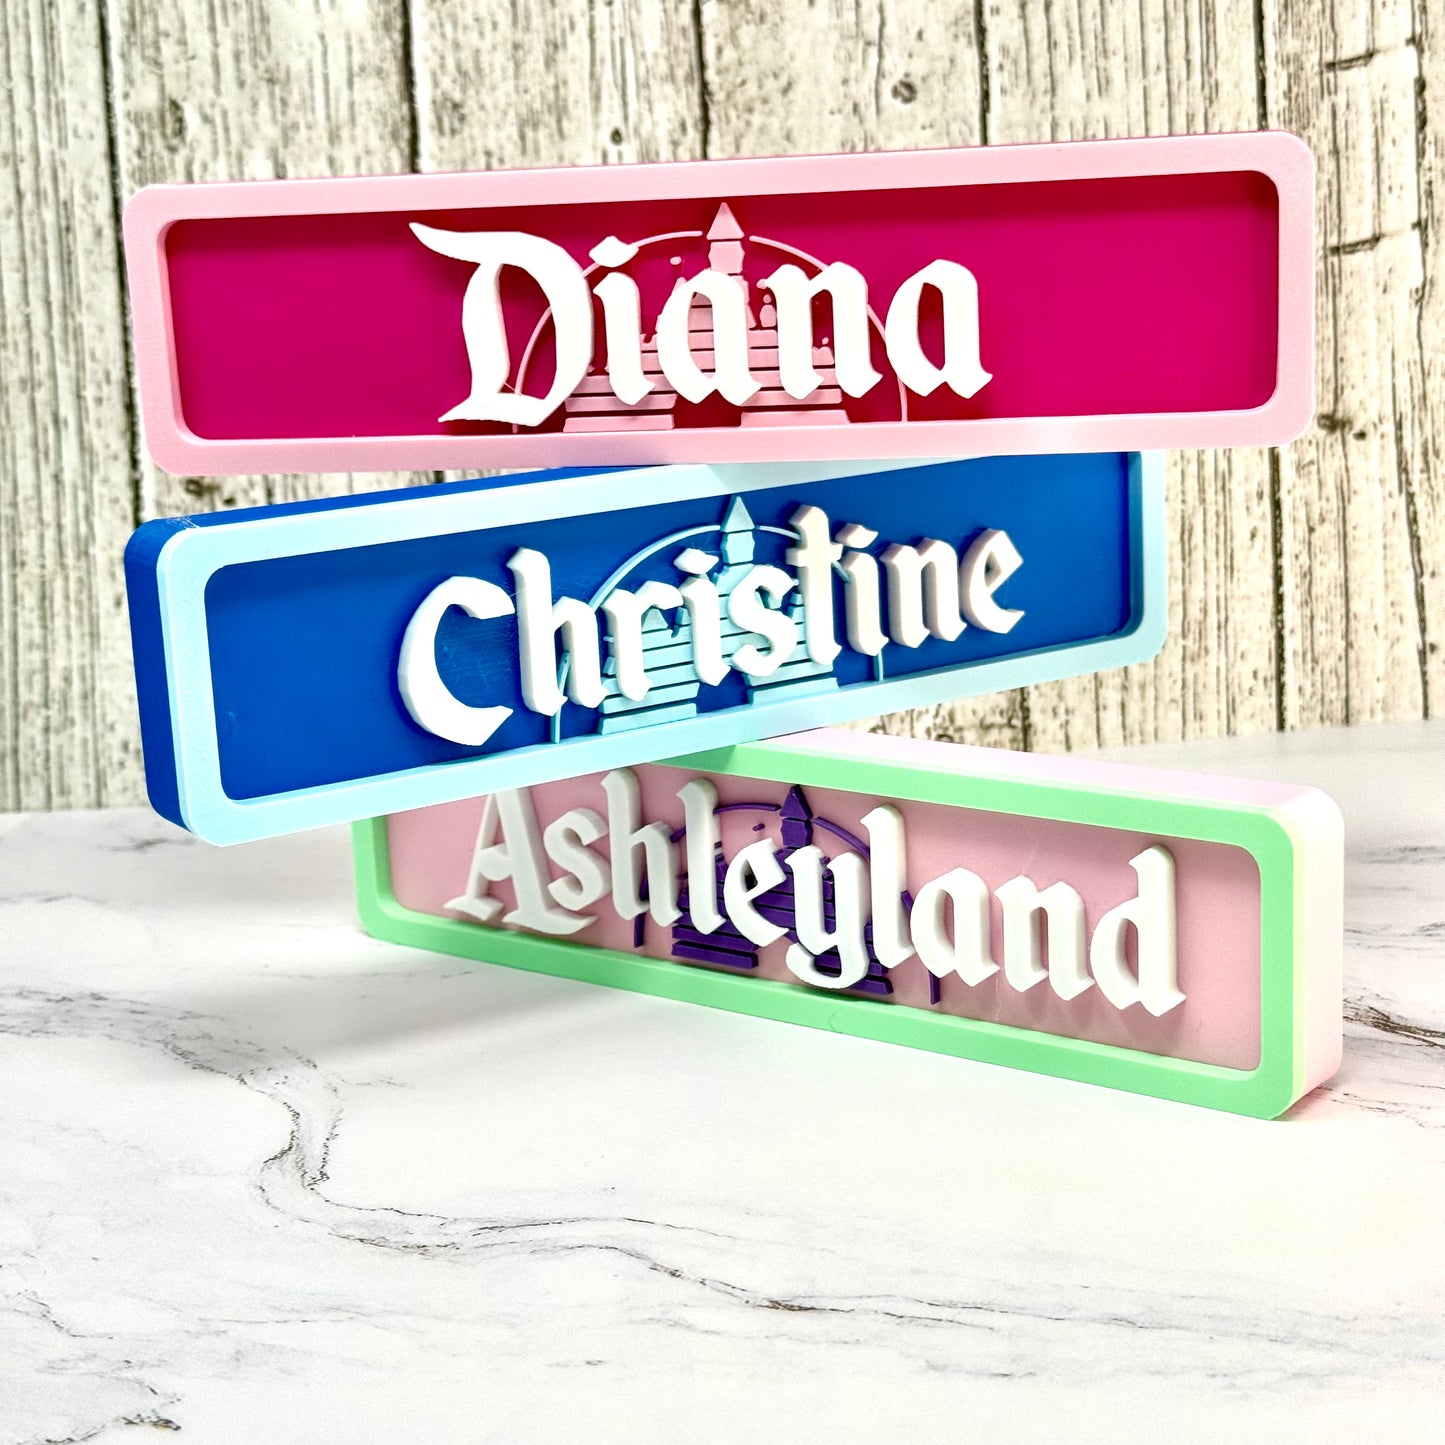 Disneyland-Inspired Personalized Custom 3D-Printed Name Sign